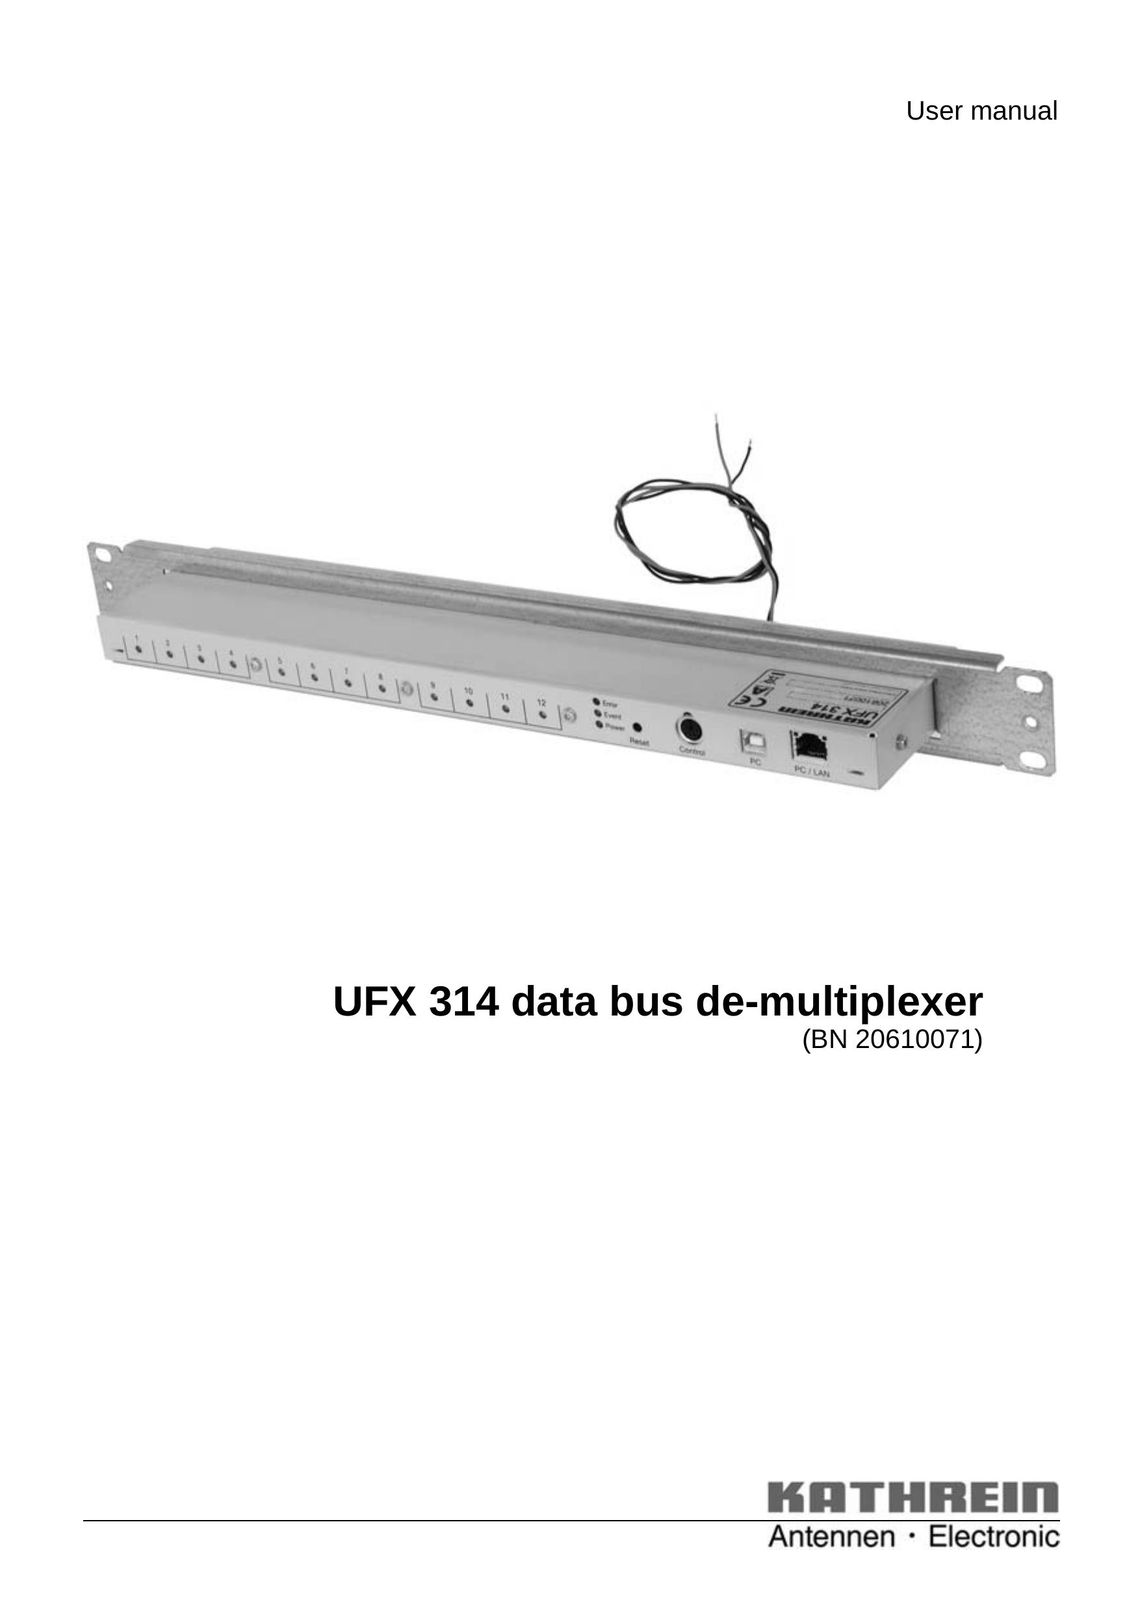 Kathrein UFX 314 Network Card User Manual